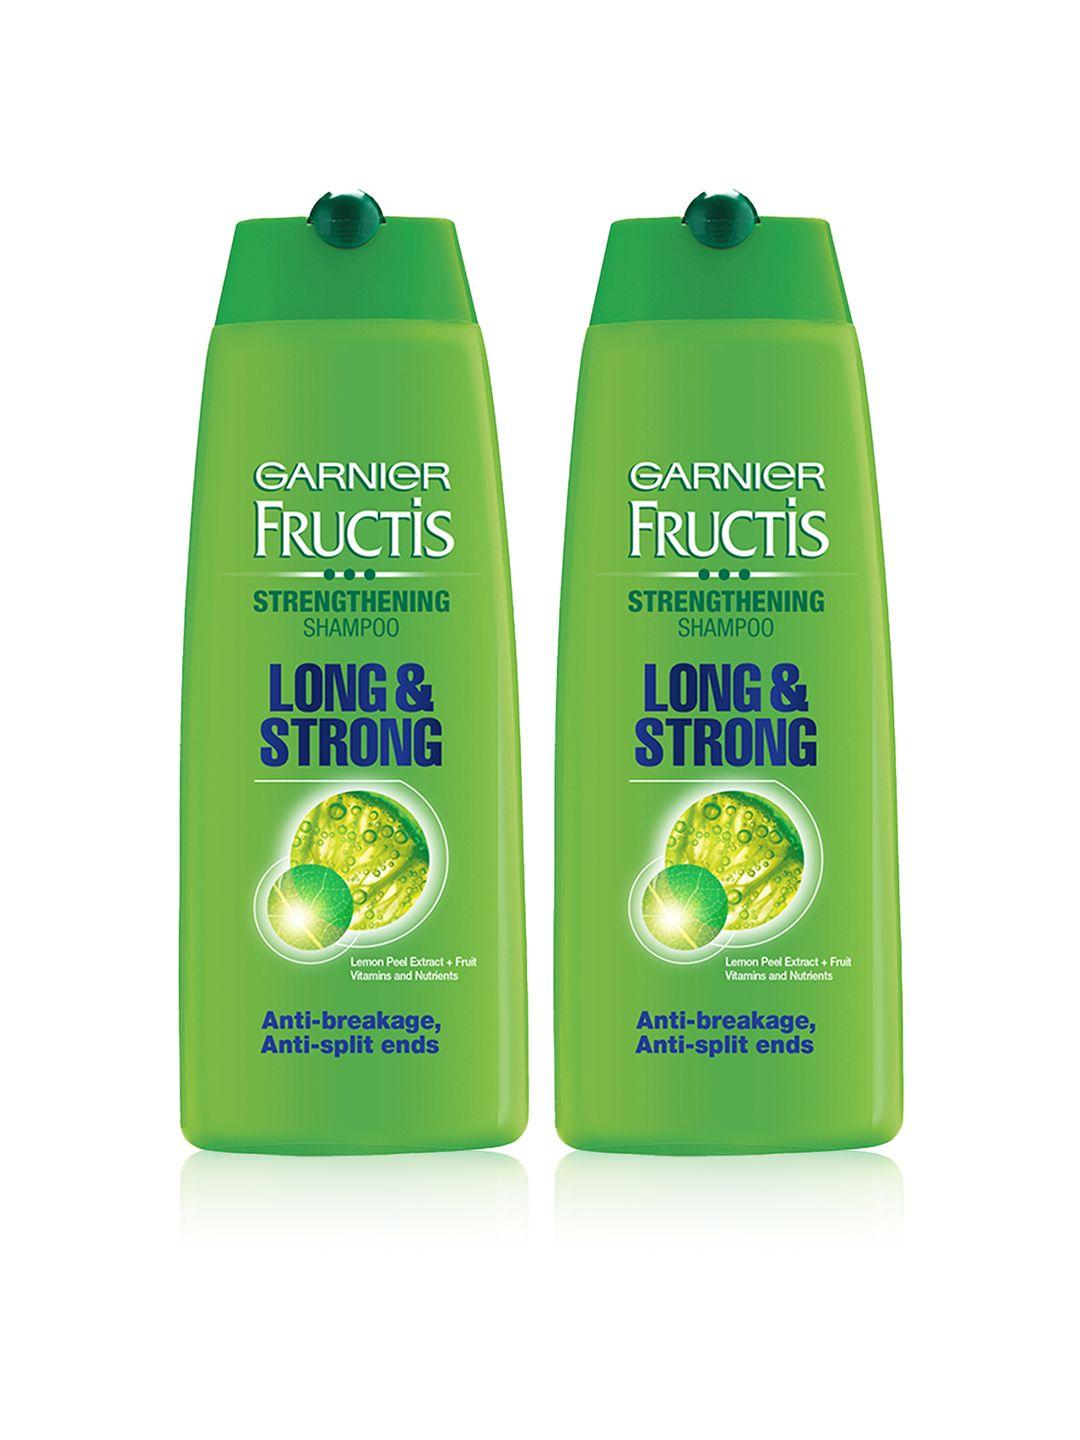 garnier set of 2 long & strong strengthening shampoo - 175ml each